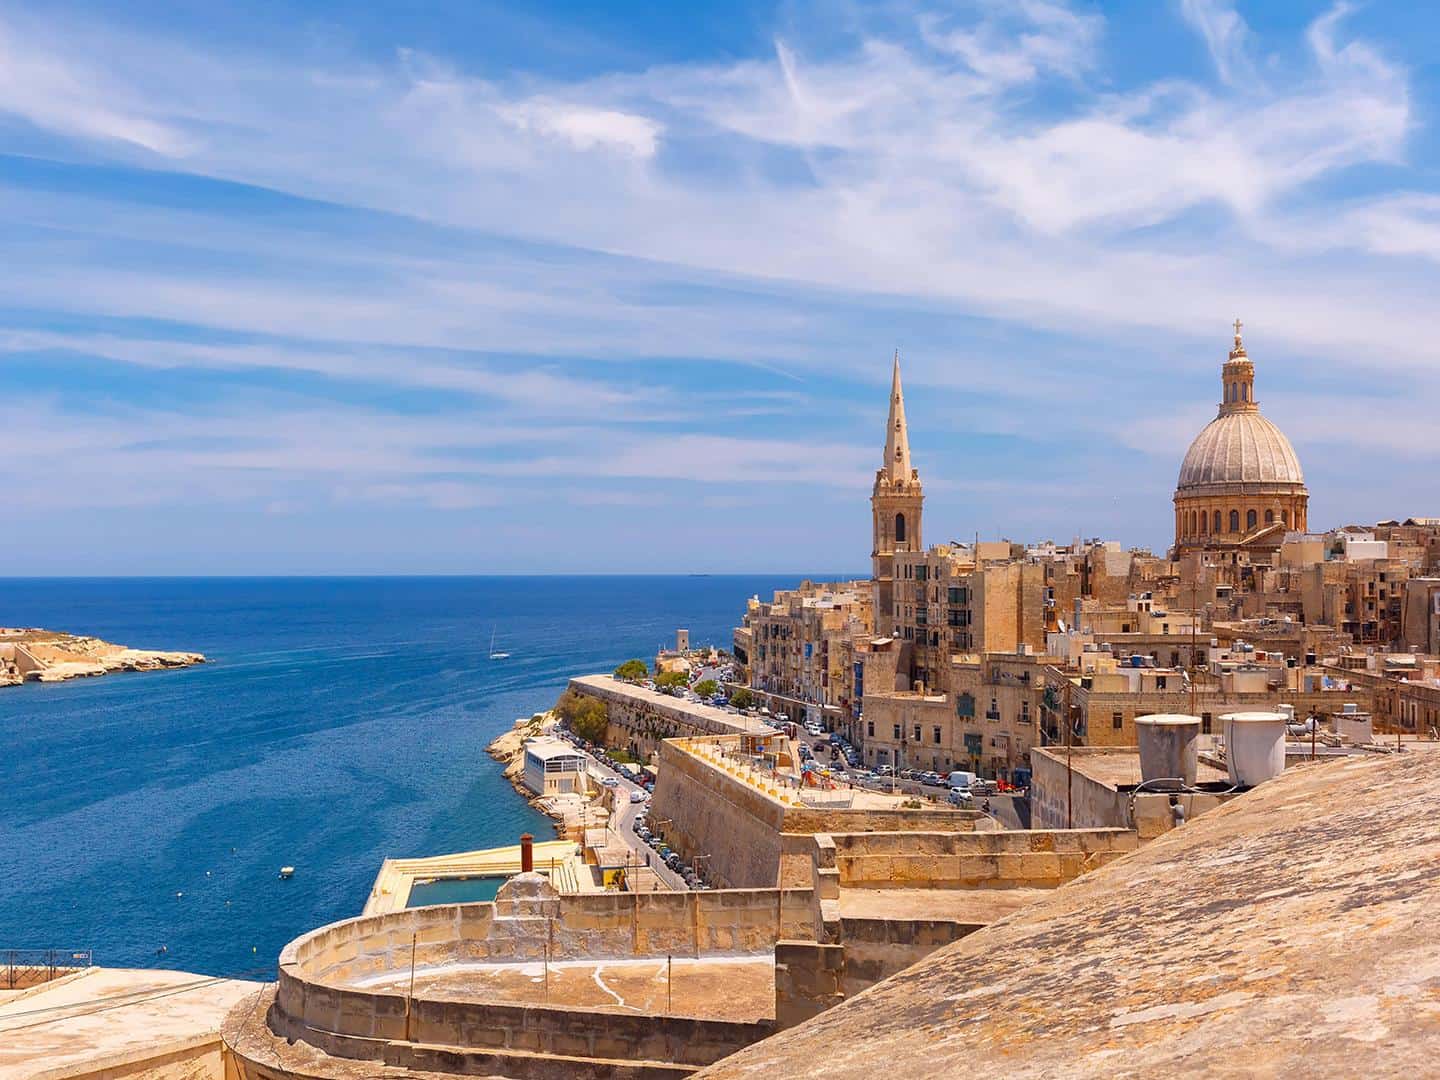 Valletta, European Capital of Culture in 2018